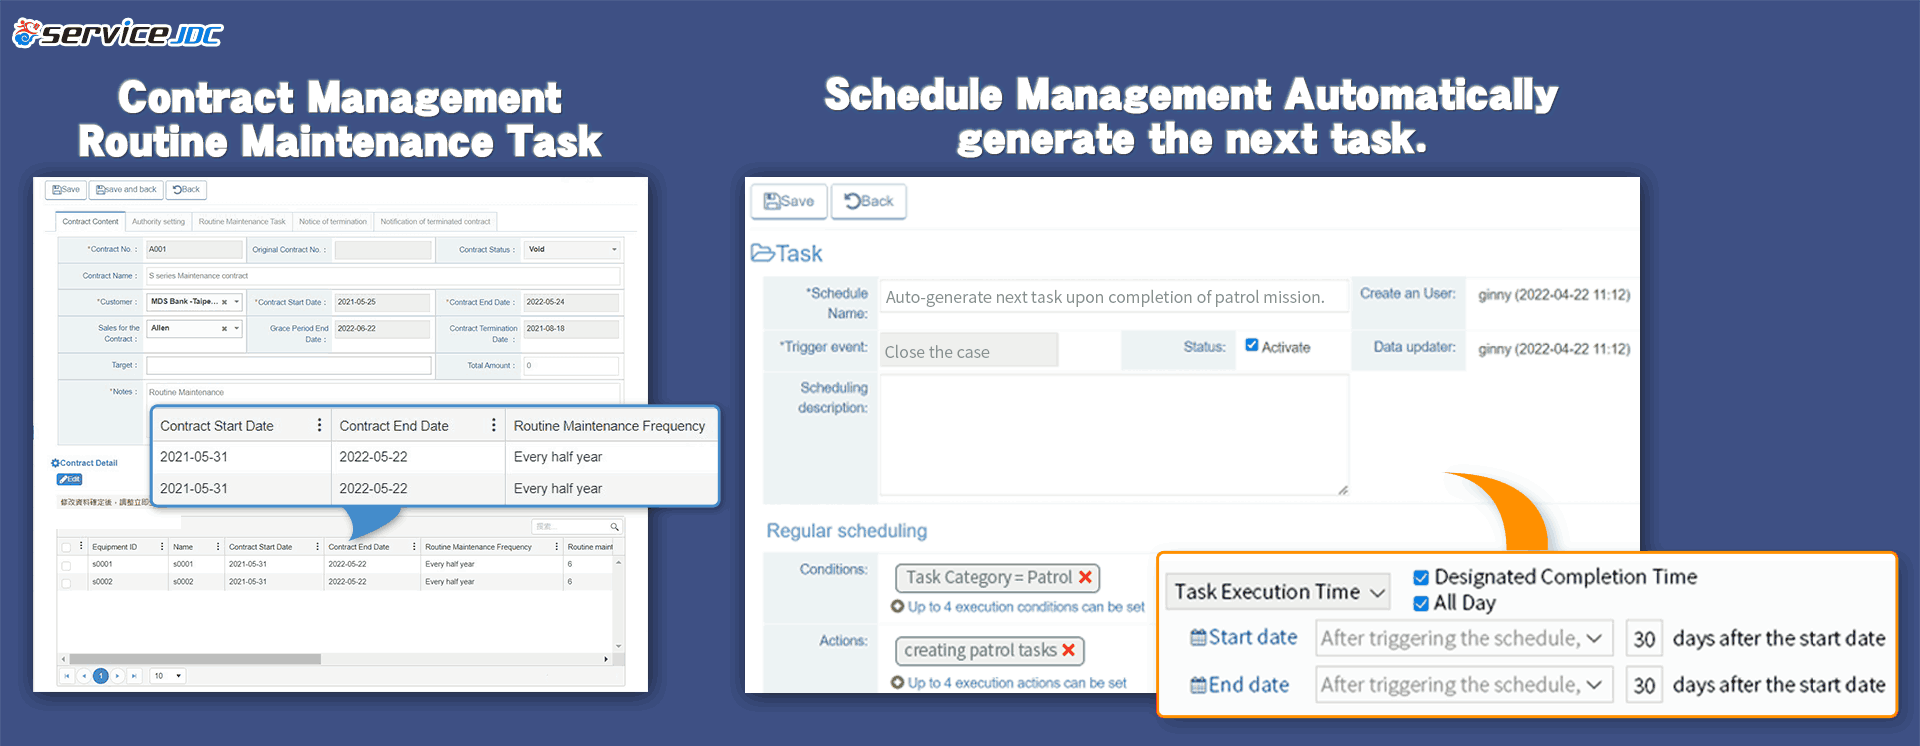 servicejdc_regular_maintenance_tasks